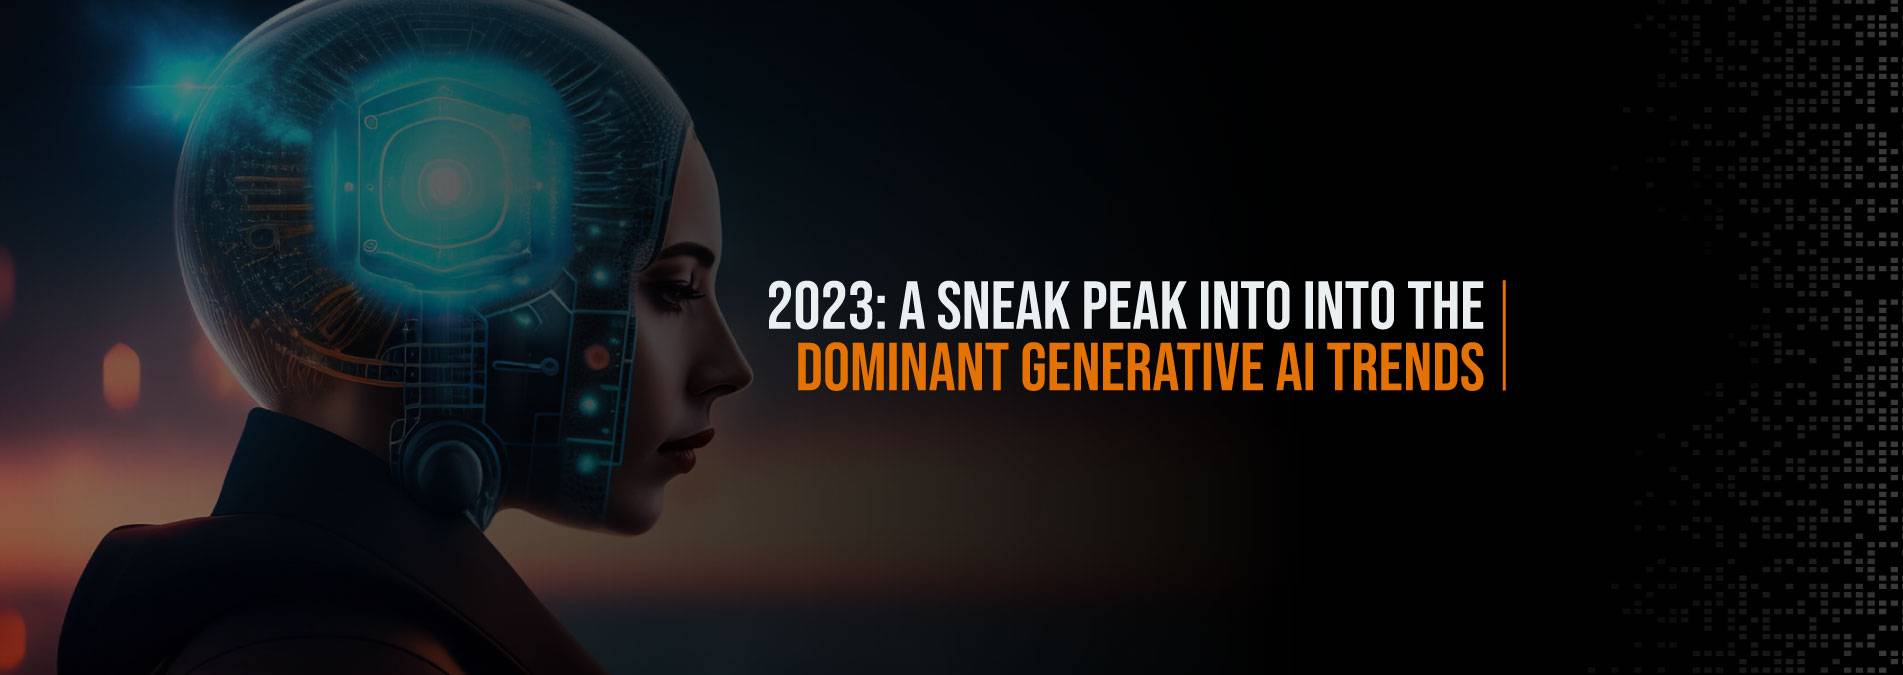 2023: A Sneak Peek into the Dominant Generative AI Trends Internet Soft